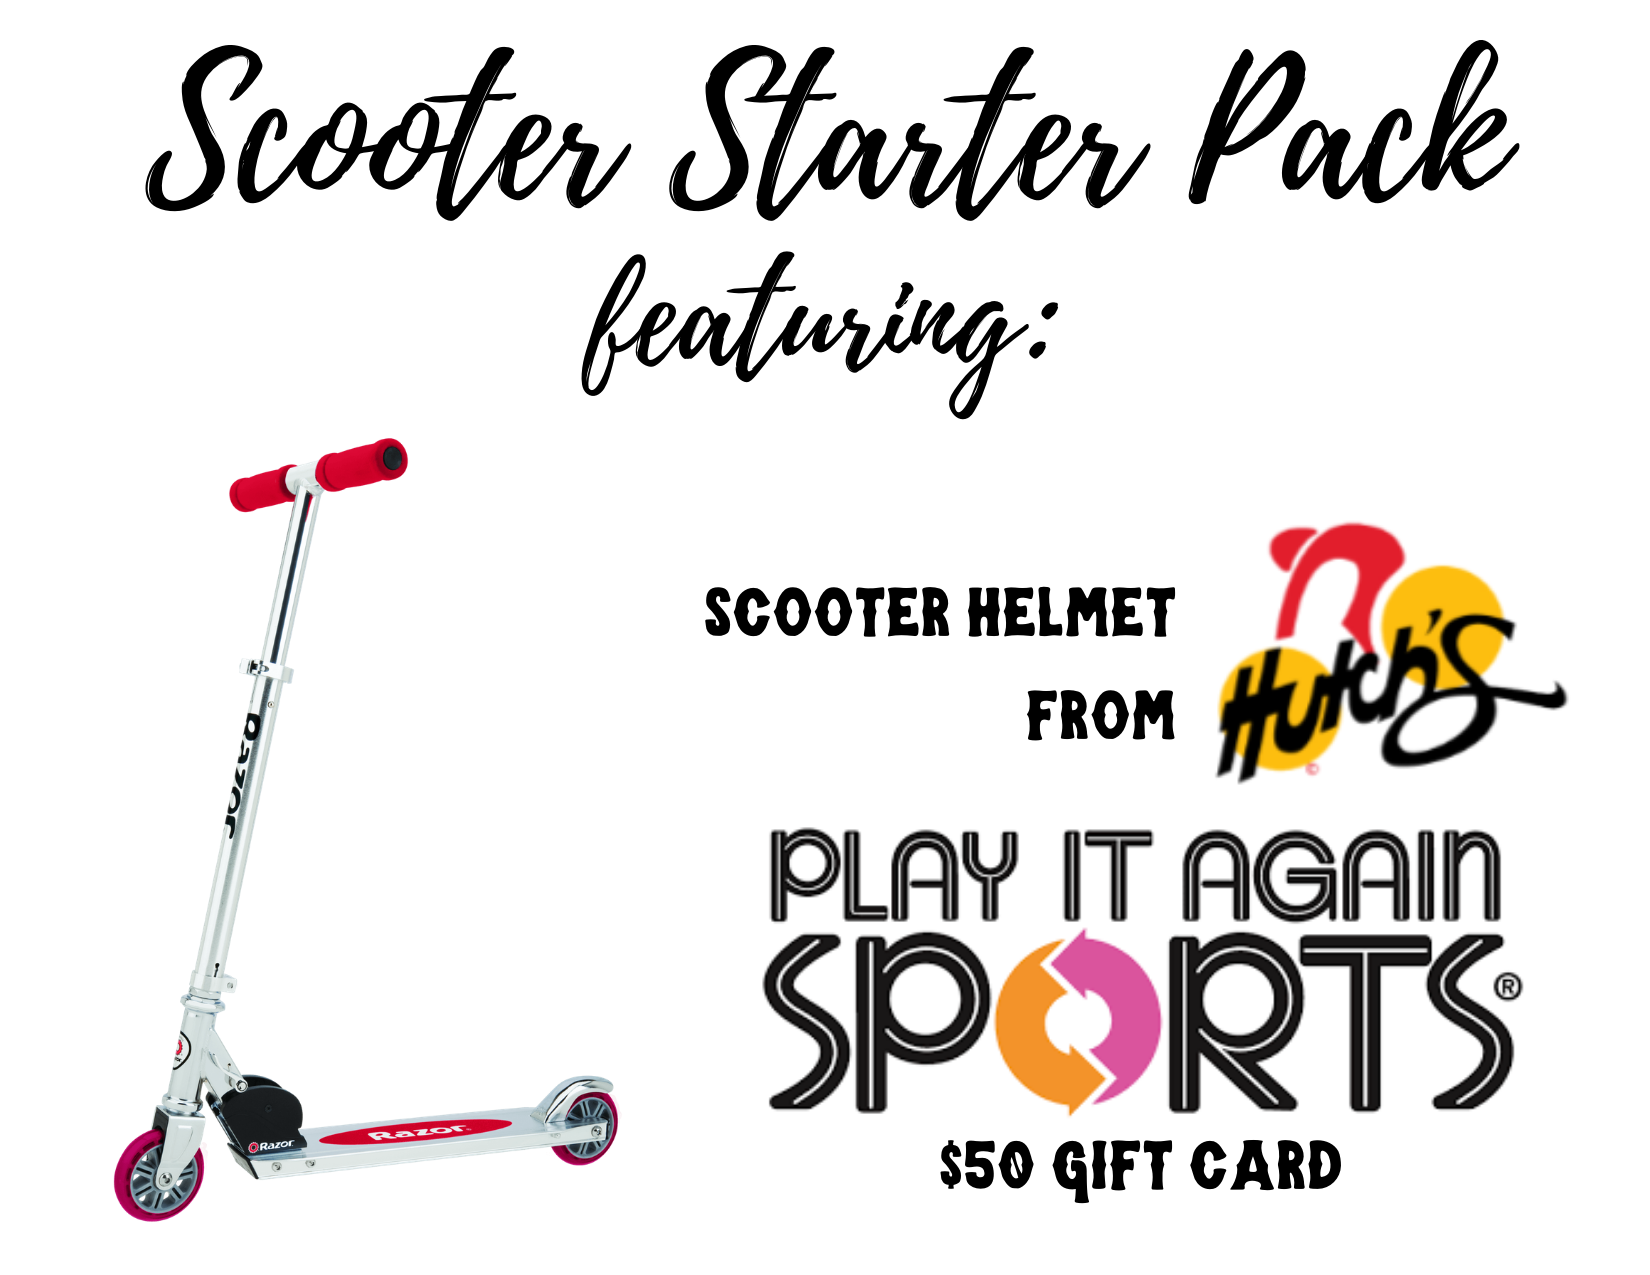 Scooter Starter Pack